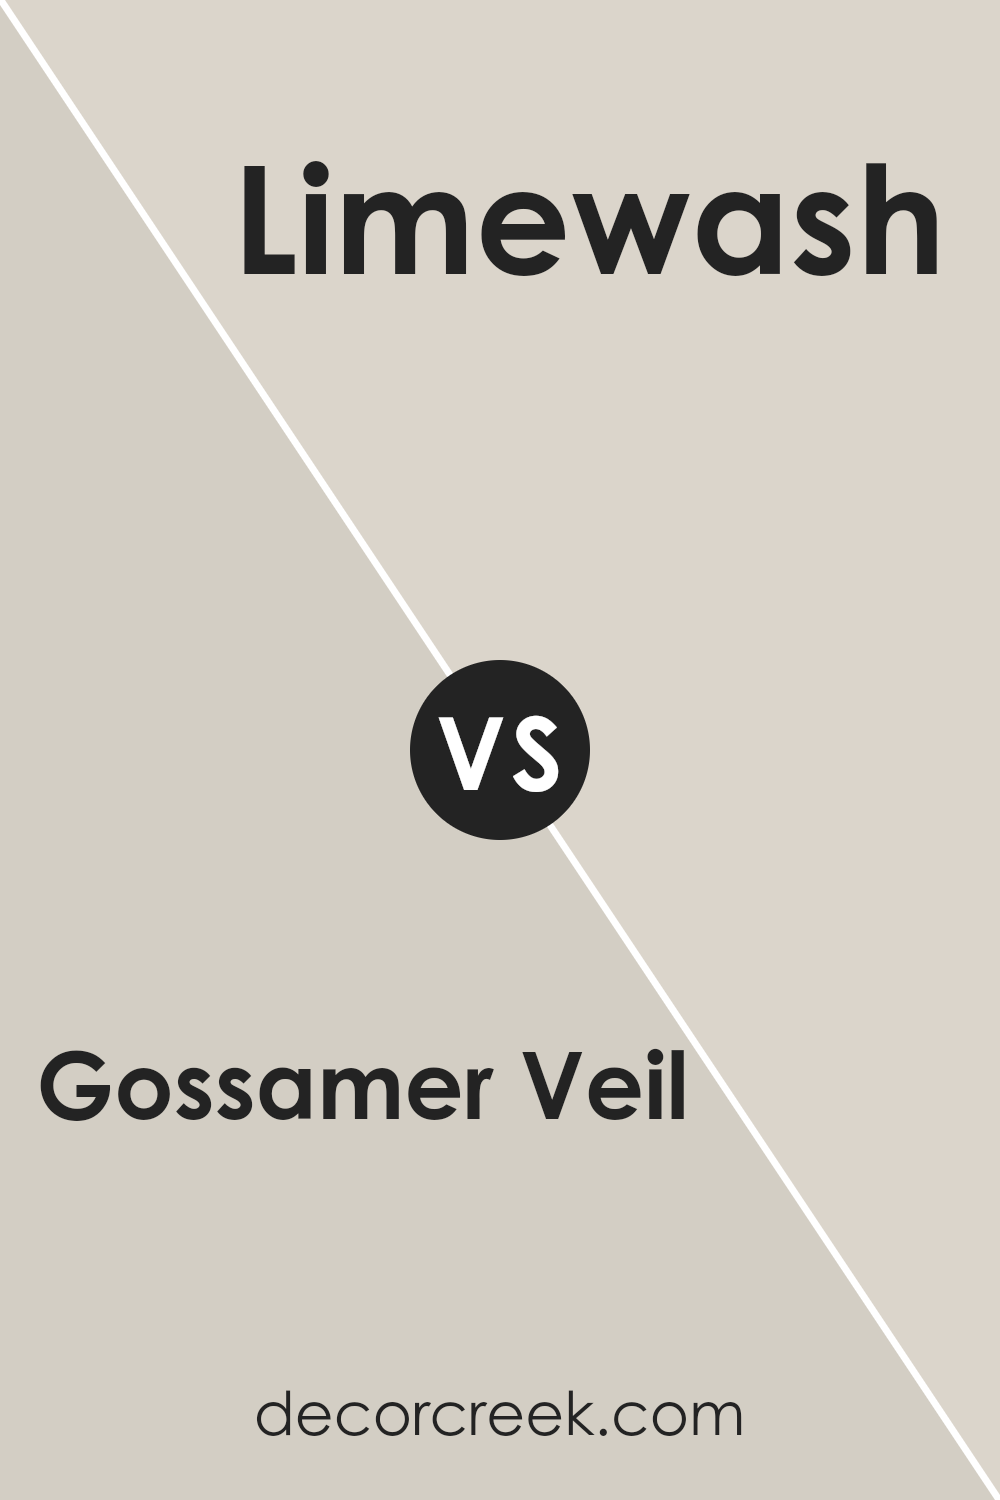 gossamer_veil_sw_9165_vs_limewash_sw_9589